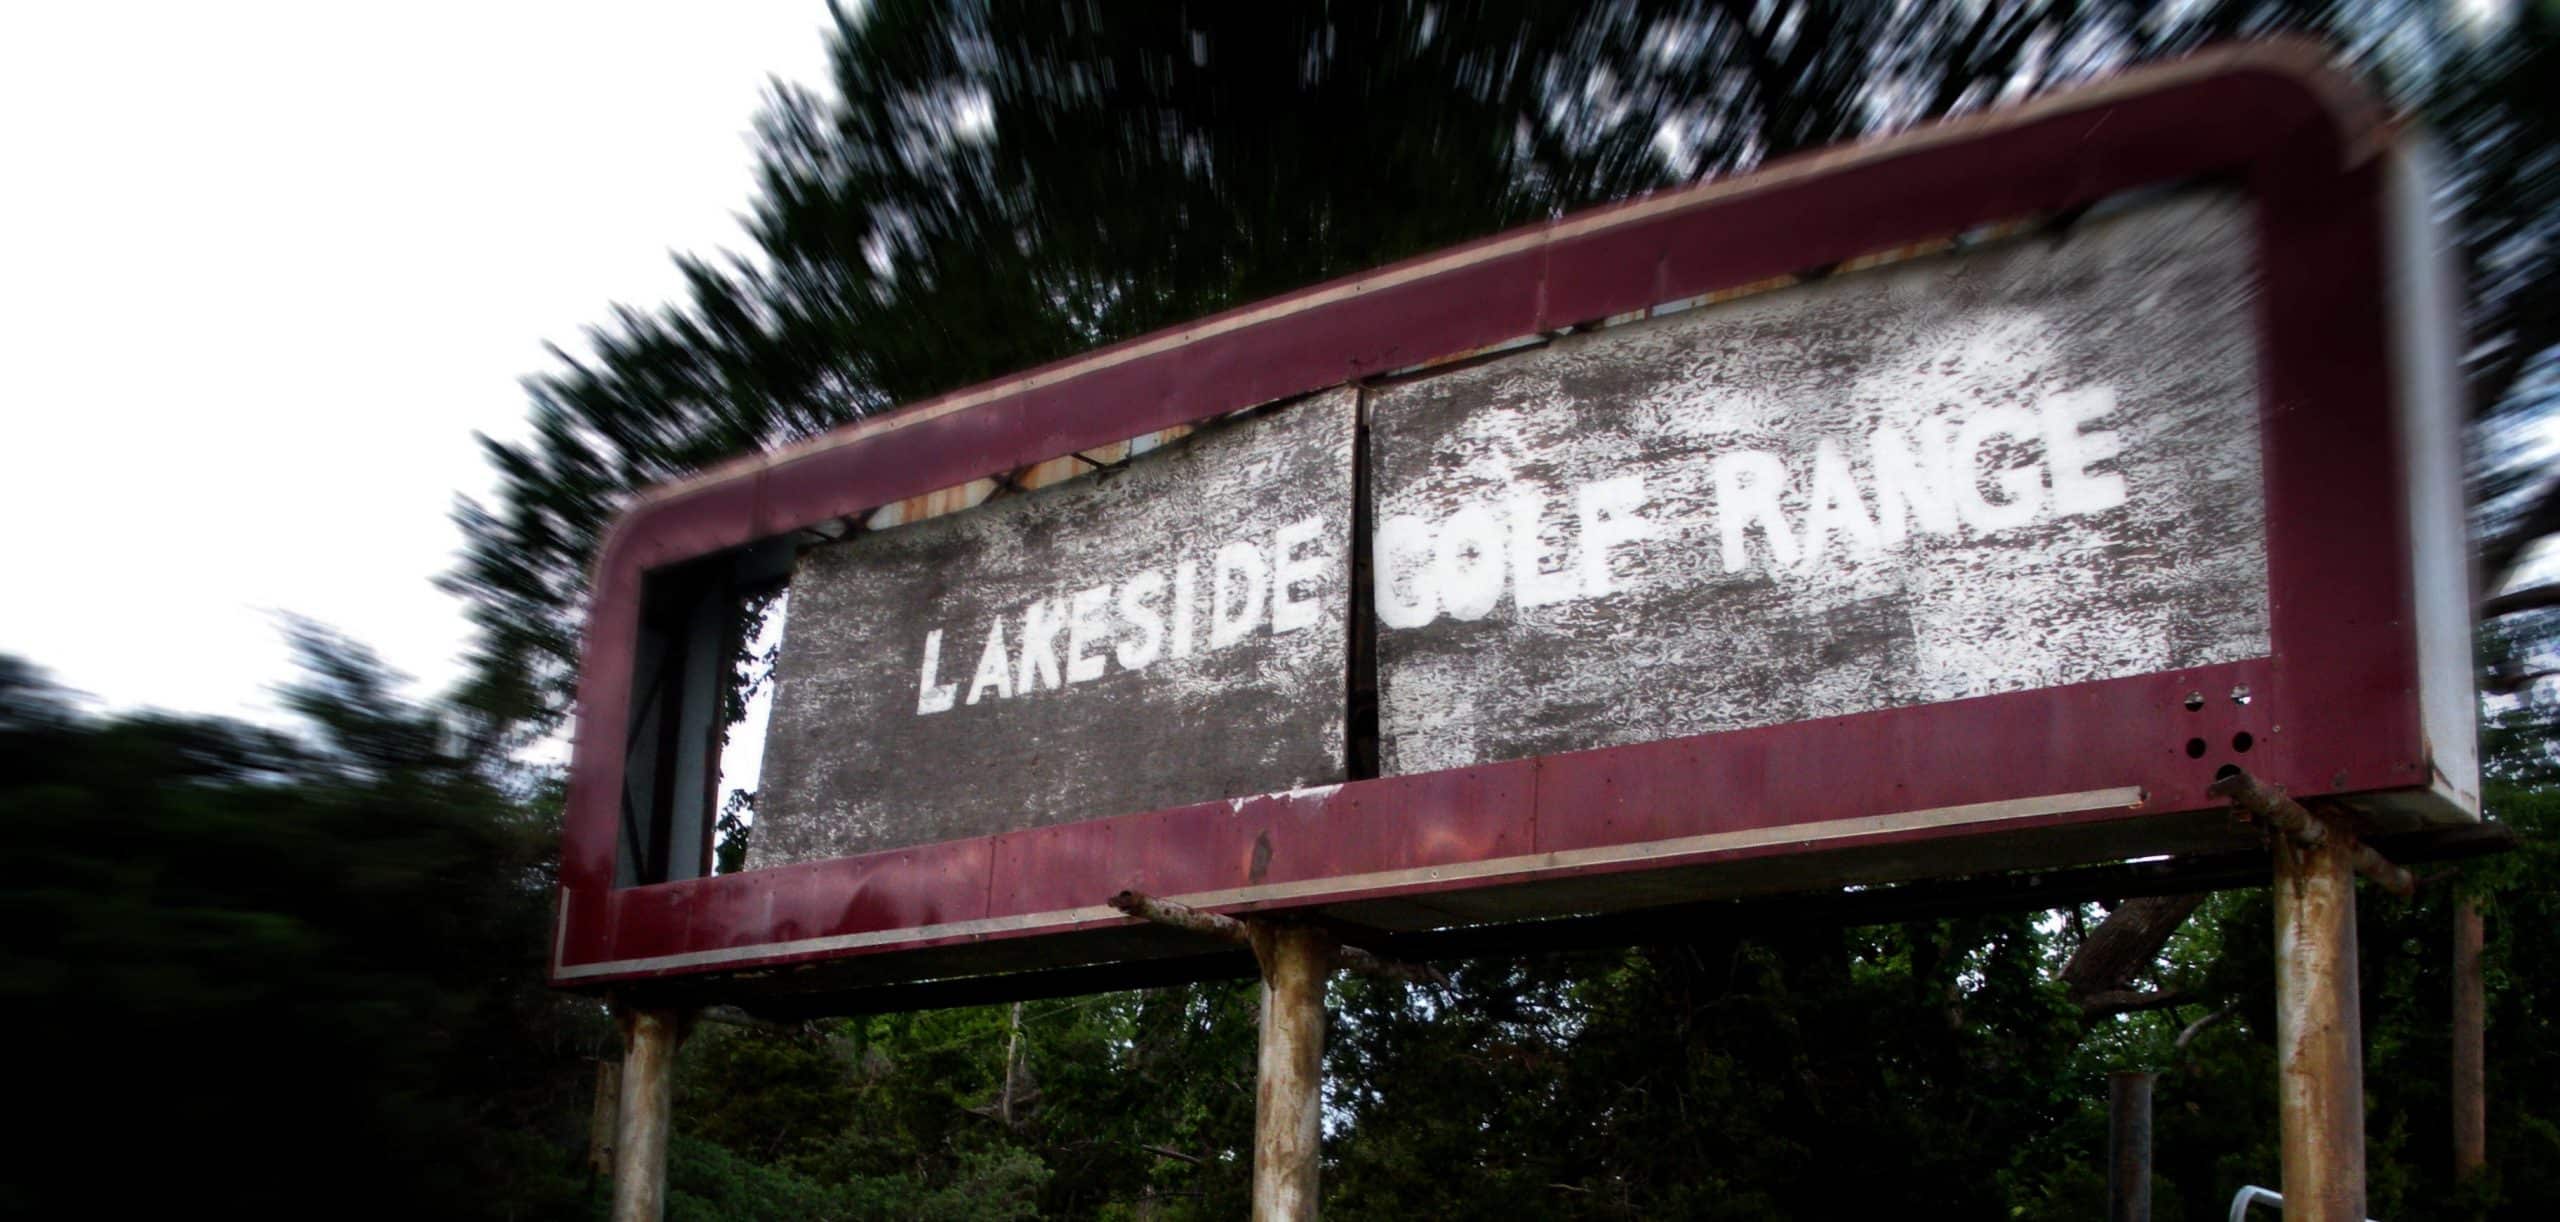 Lakeside Golf Driving Range/Lake-Air Drive-In